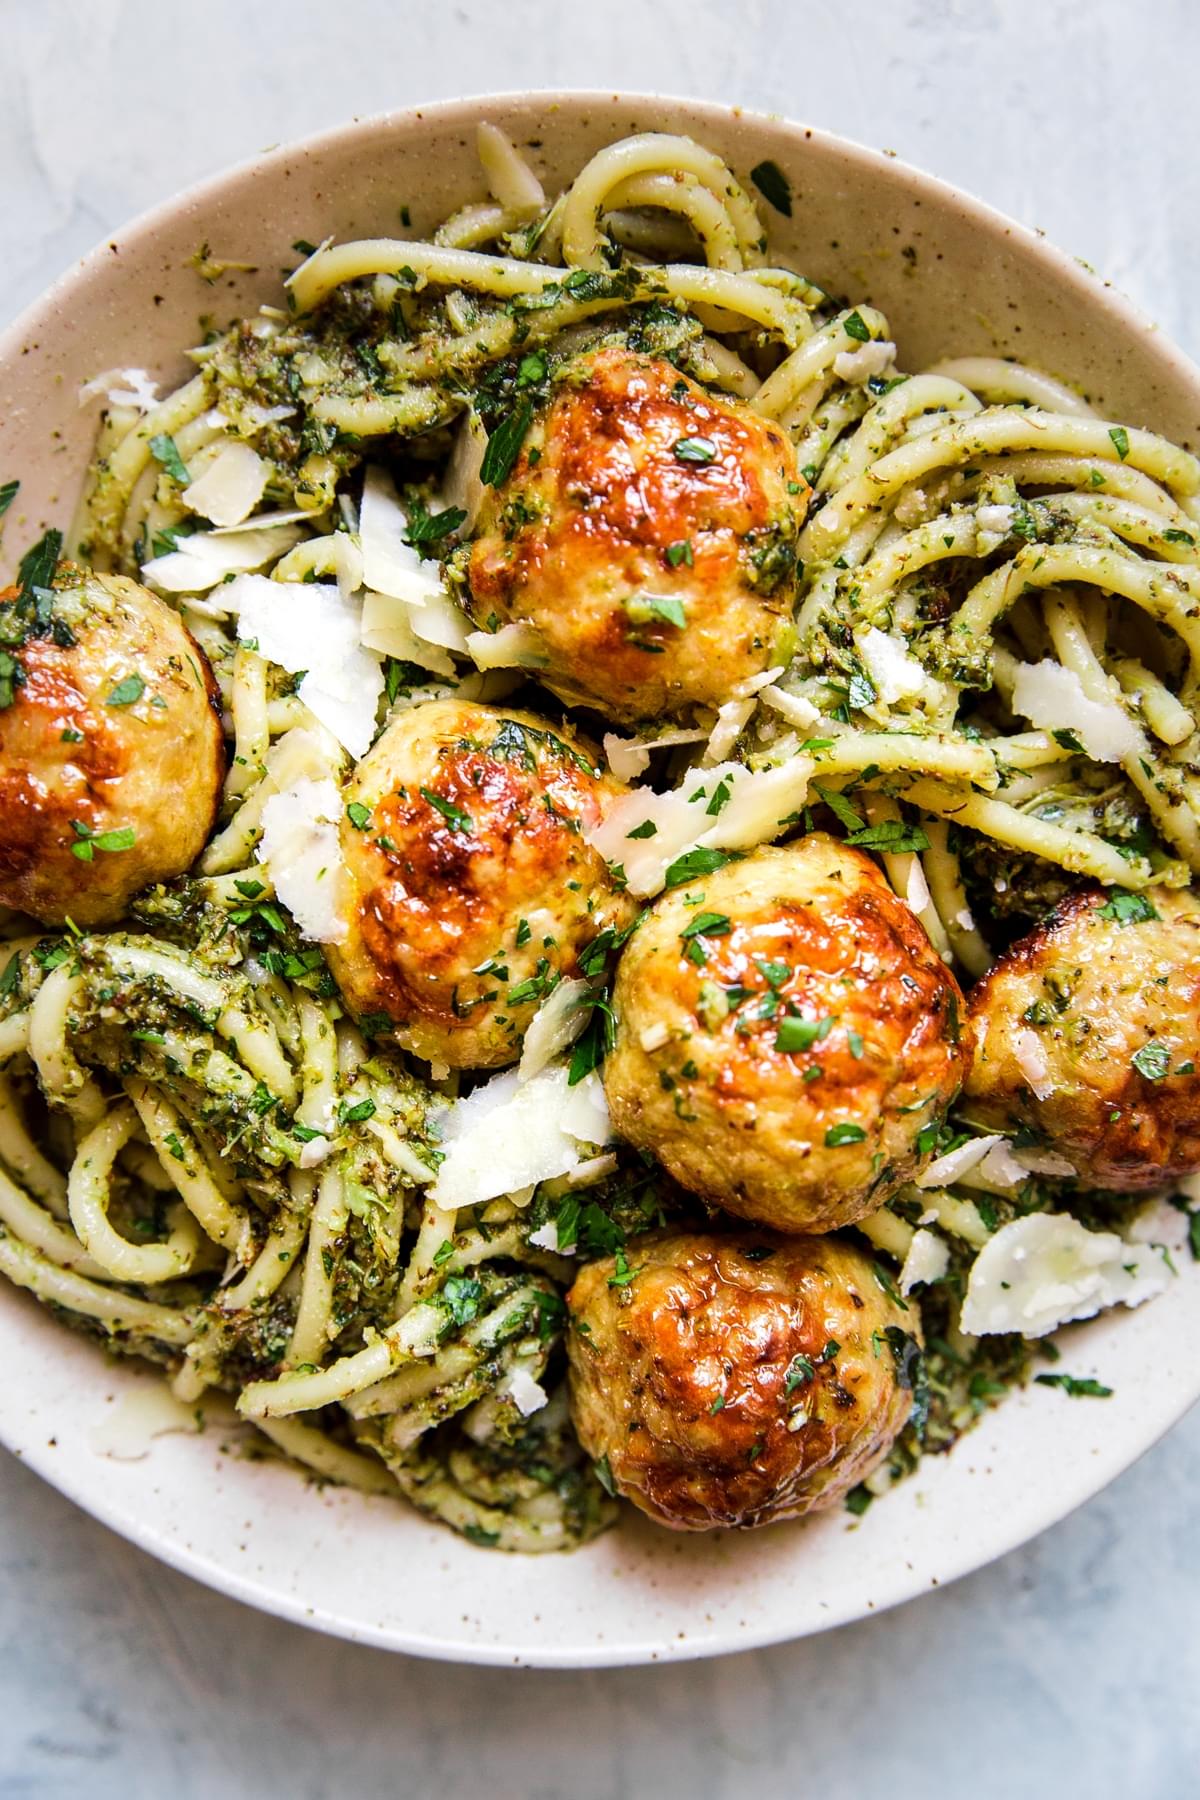 broccoli pesto on pasta with chicken meatballs